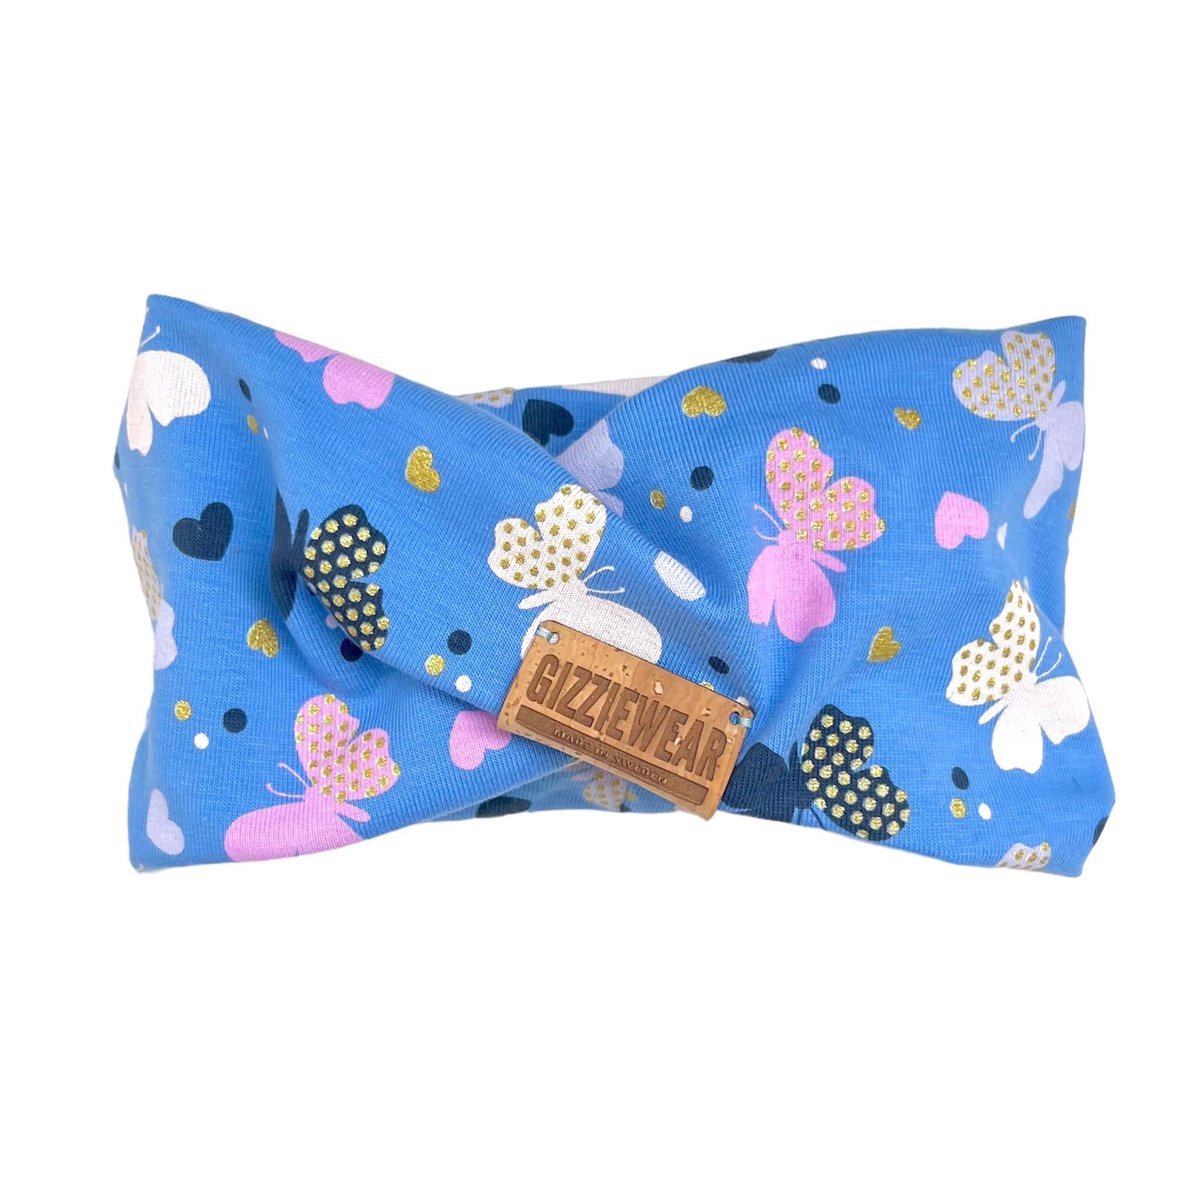 Baby Blue Butterflies scarf is a perfect choice for any #catadventure 😻🐾🧣⛰️
#GizzieWear #CatsOfTwitter #Catshop #Petshop #Adventurecats #Adventurecat #SmallBusiness #Sweden #Swedishpetwear #catsofinstagram